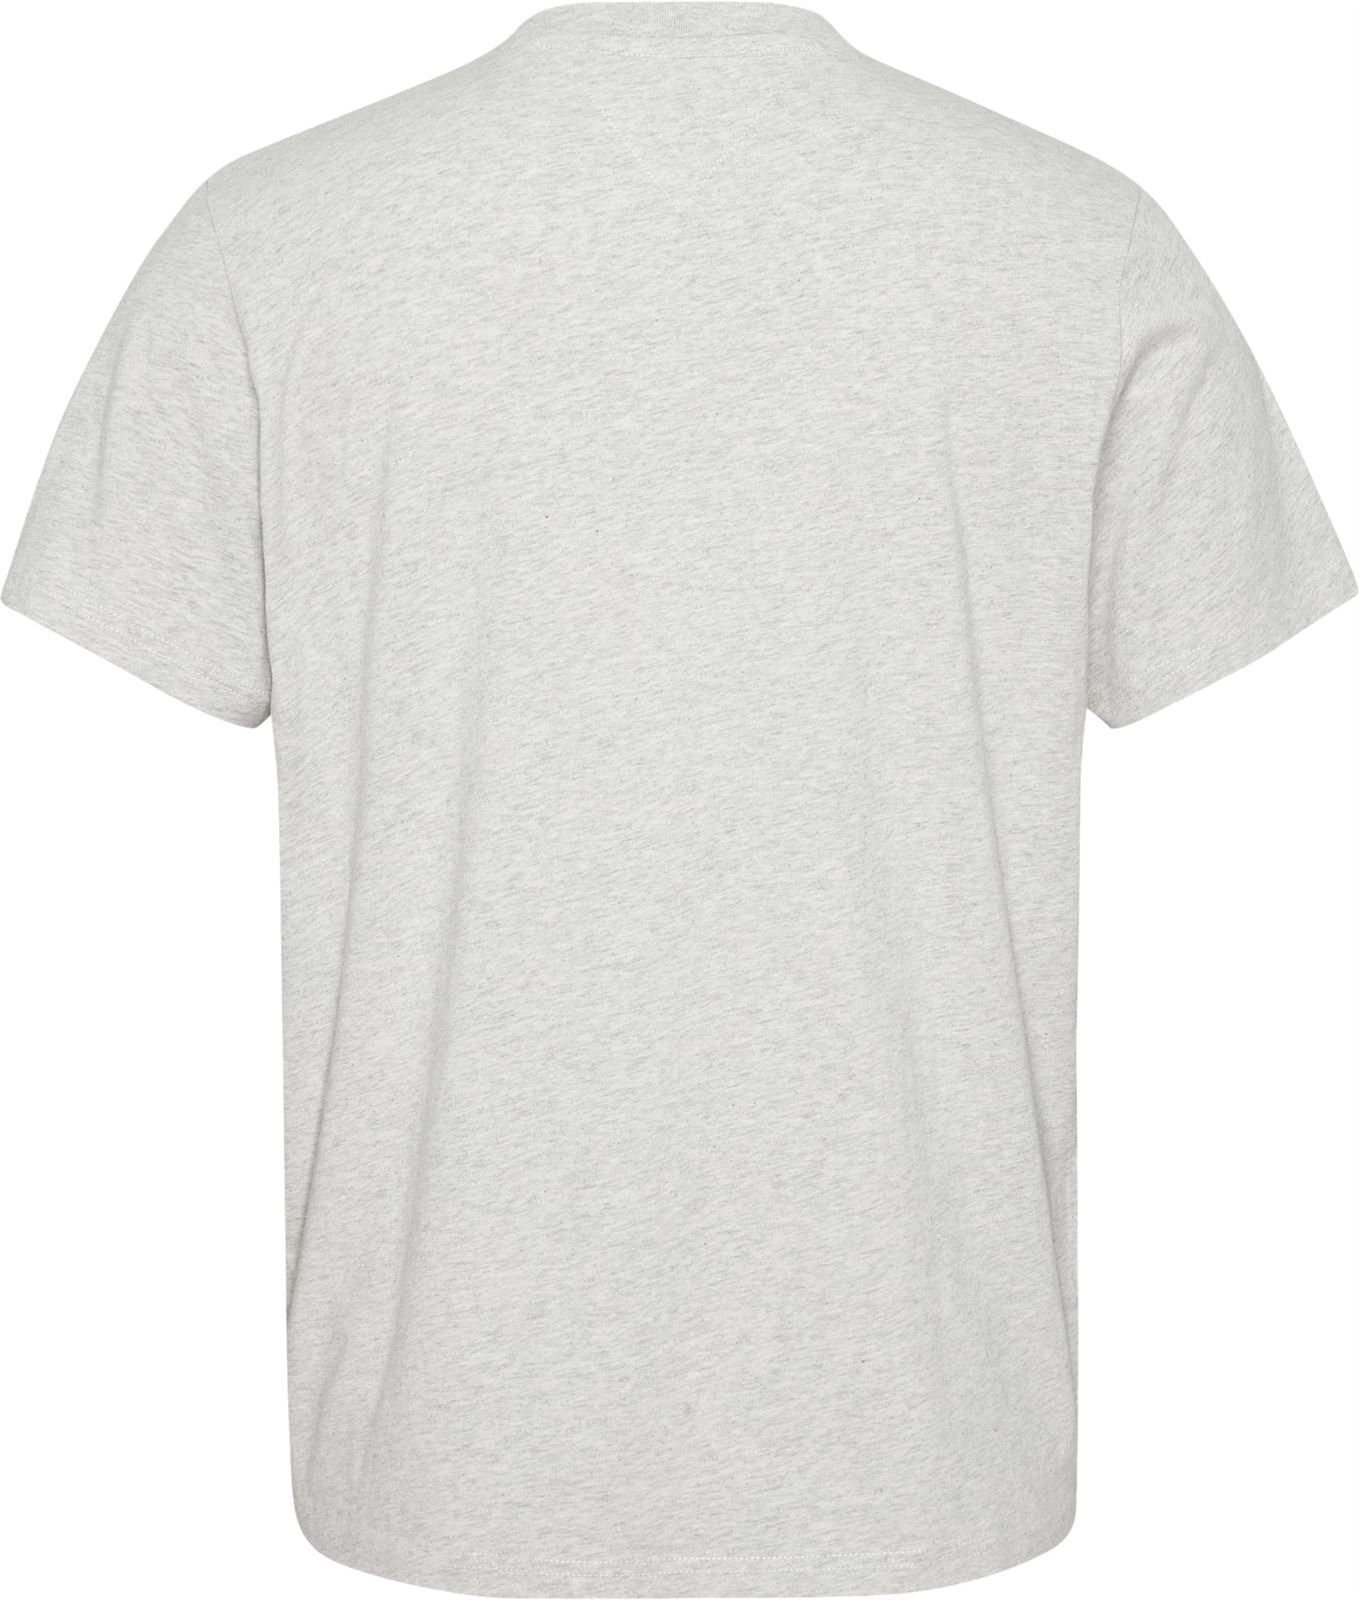 Camiseta TOMMY JEANS DM0DM16831 PJ4 silver grey heather - Imagen 2